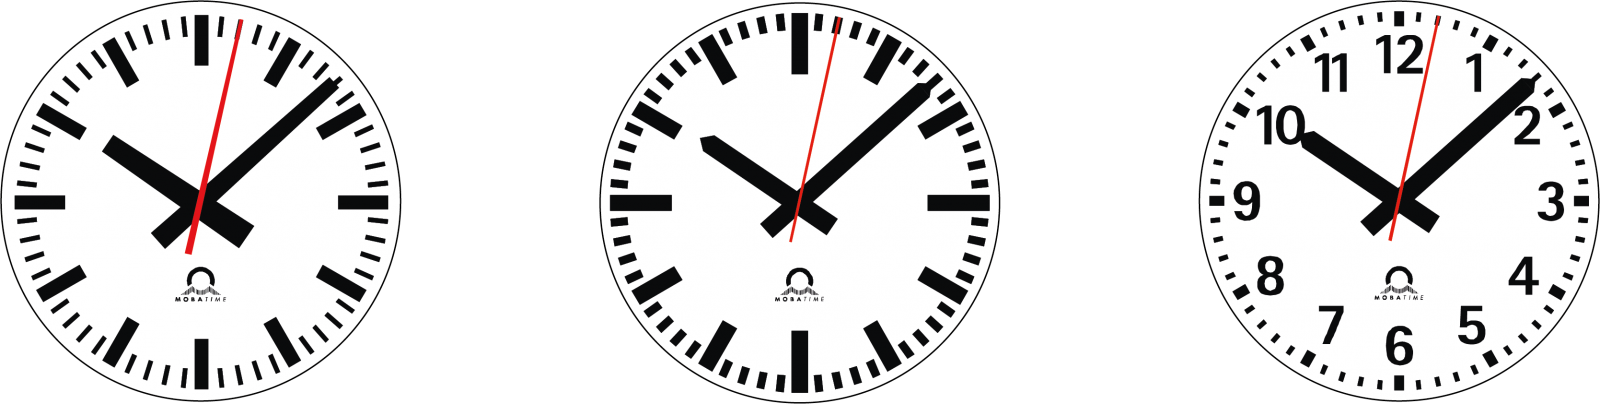 Đồng hồ đồng bộ thời gian - Analogue clock